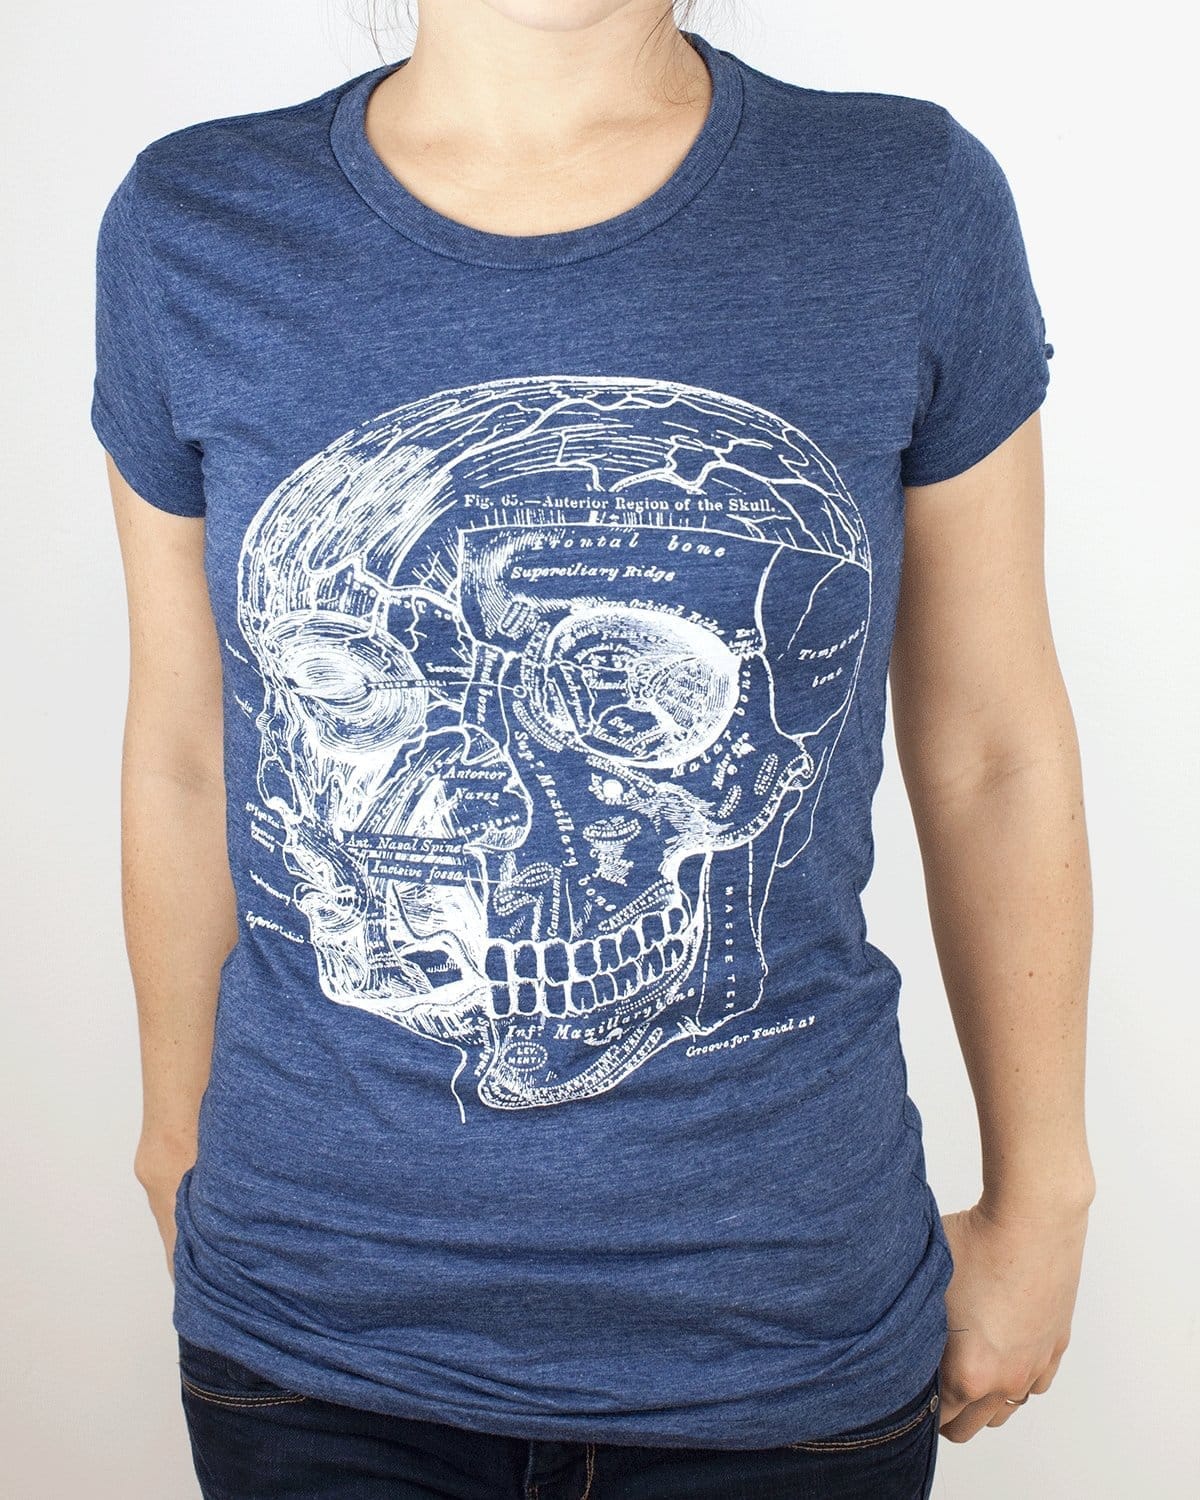 Interaktion Beskrive pust Anatomy Illustration T Shirt | Science Print TShirt – Cognitive Surplus